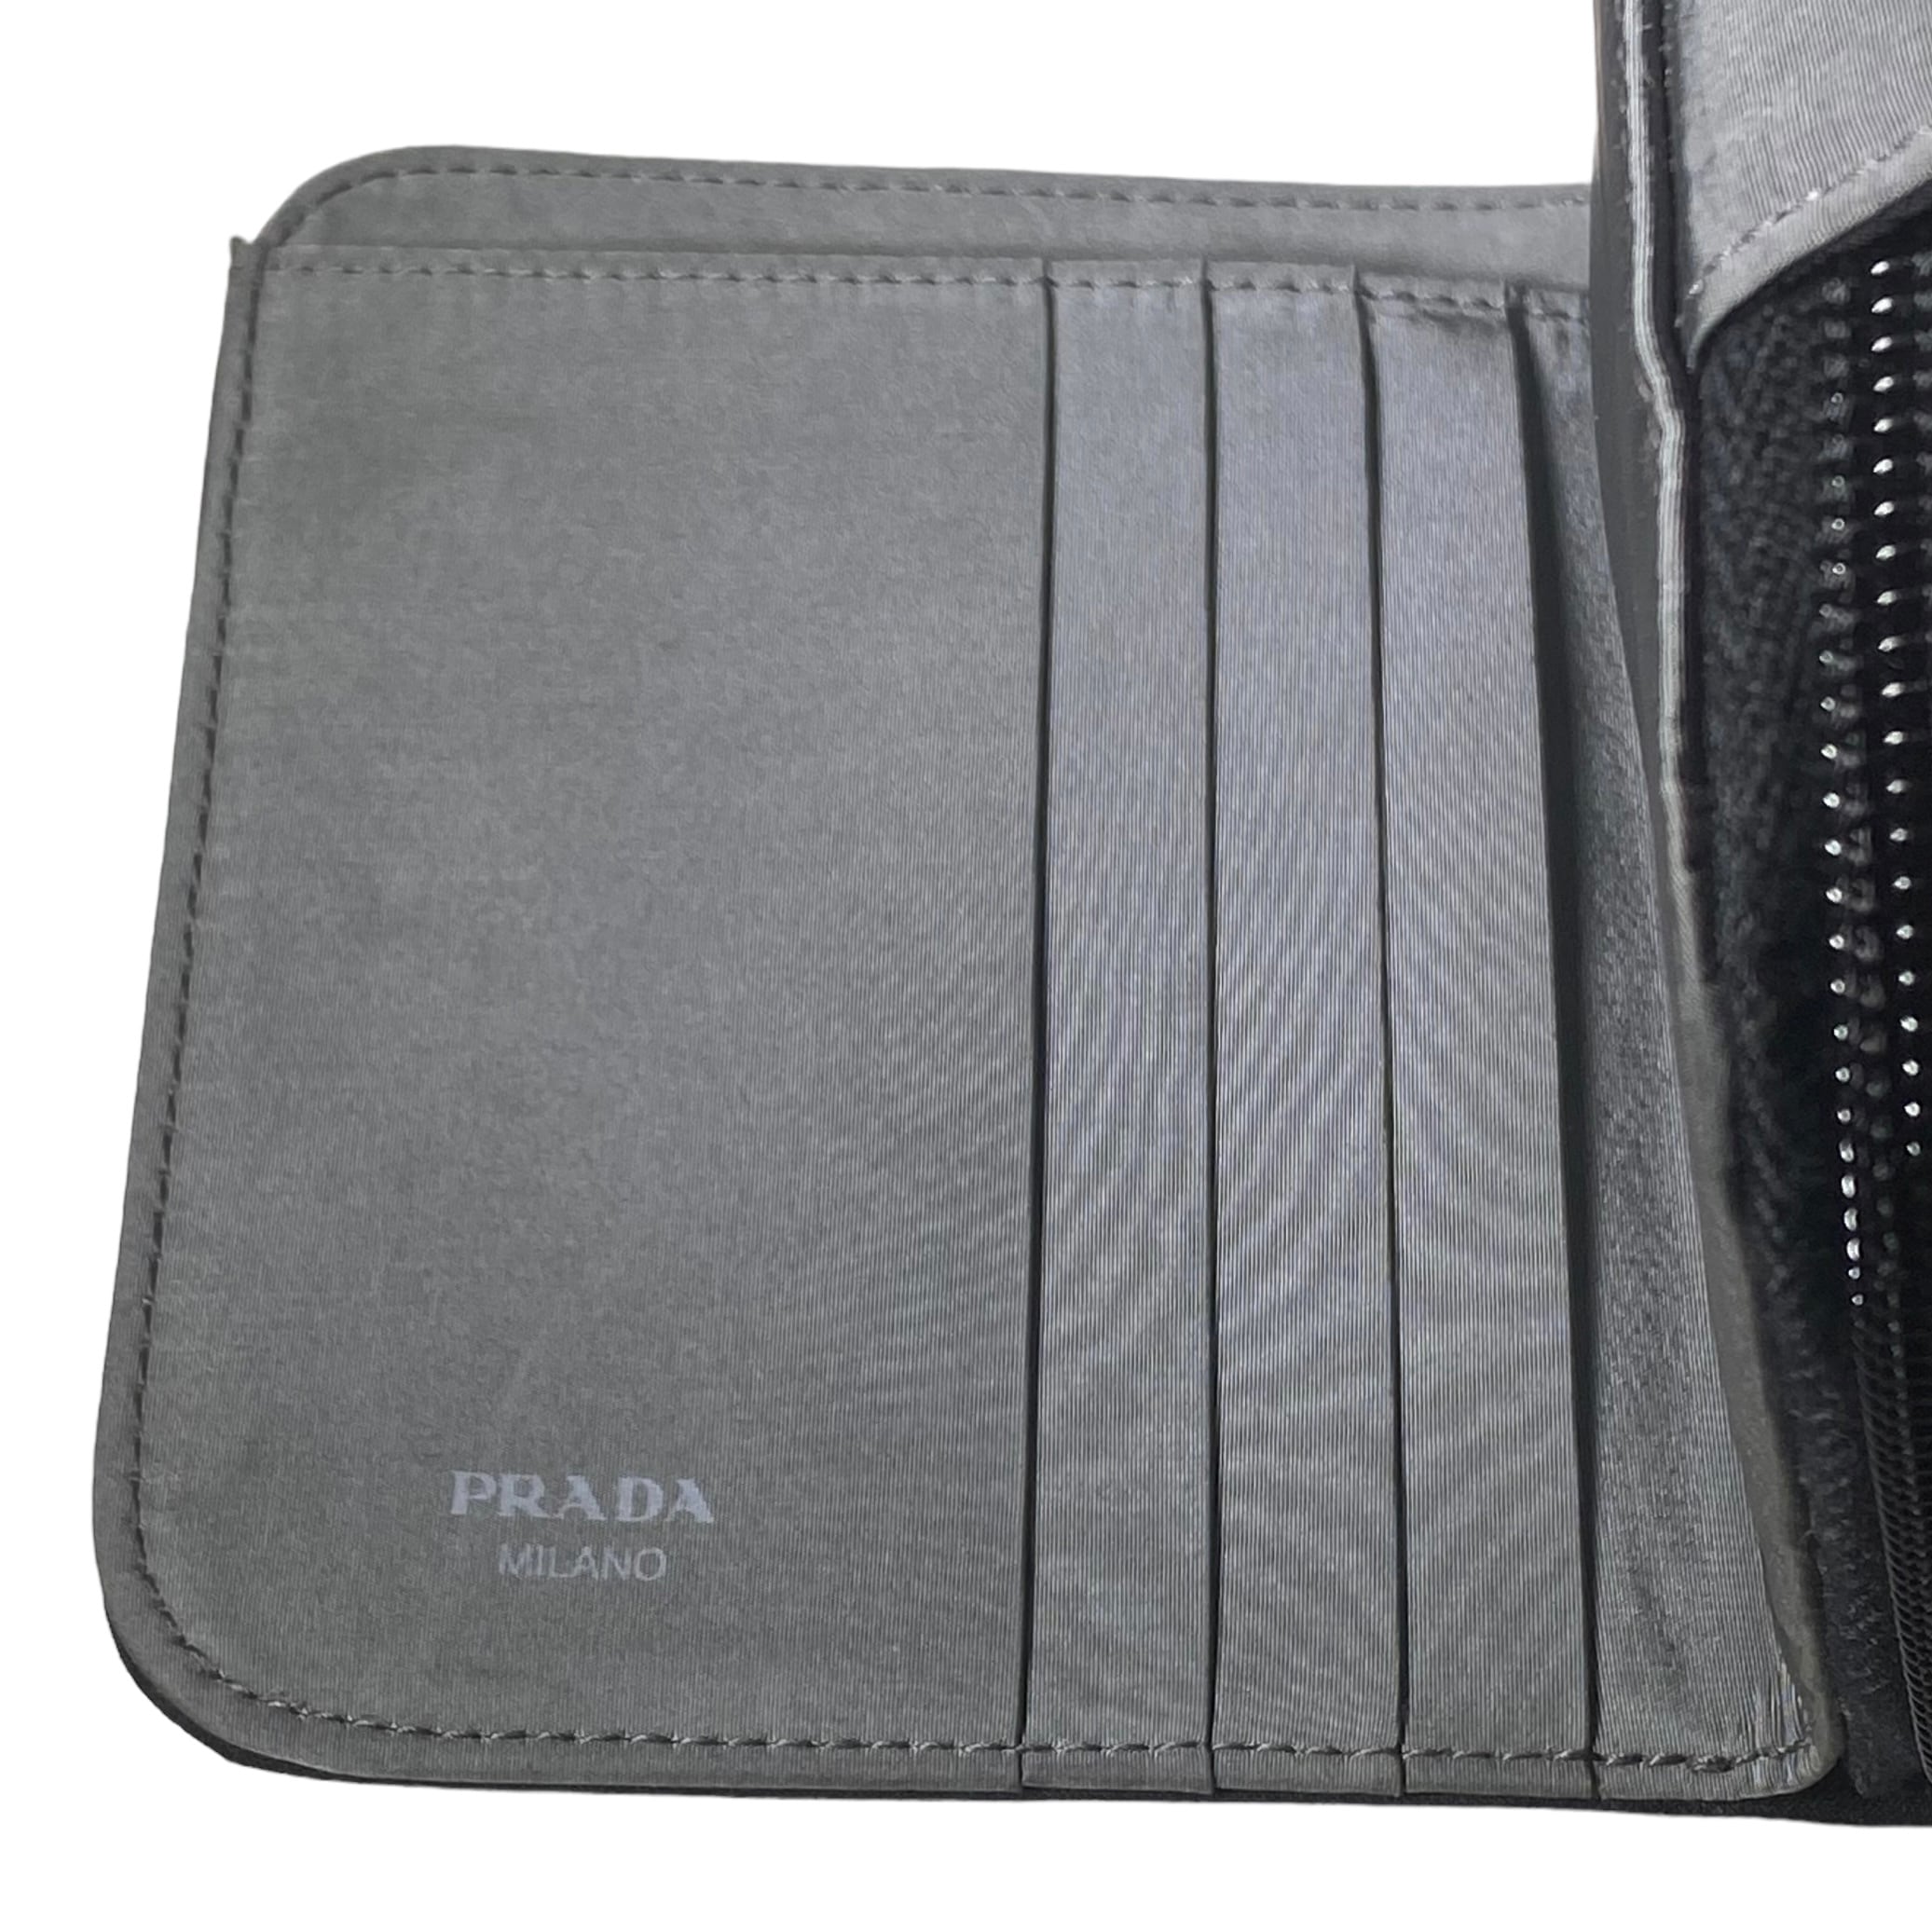 PRADA black technical fabric compact wallet | NOIR ONLINE